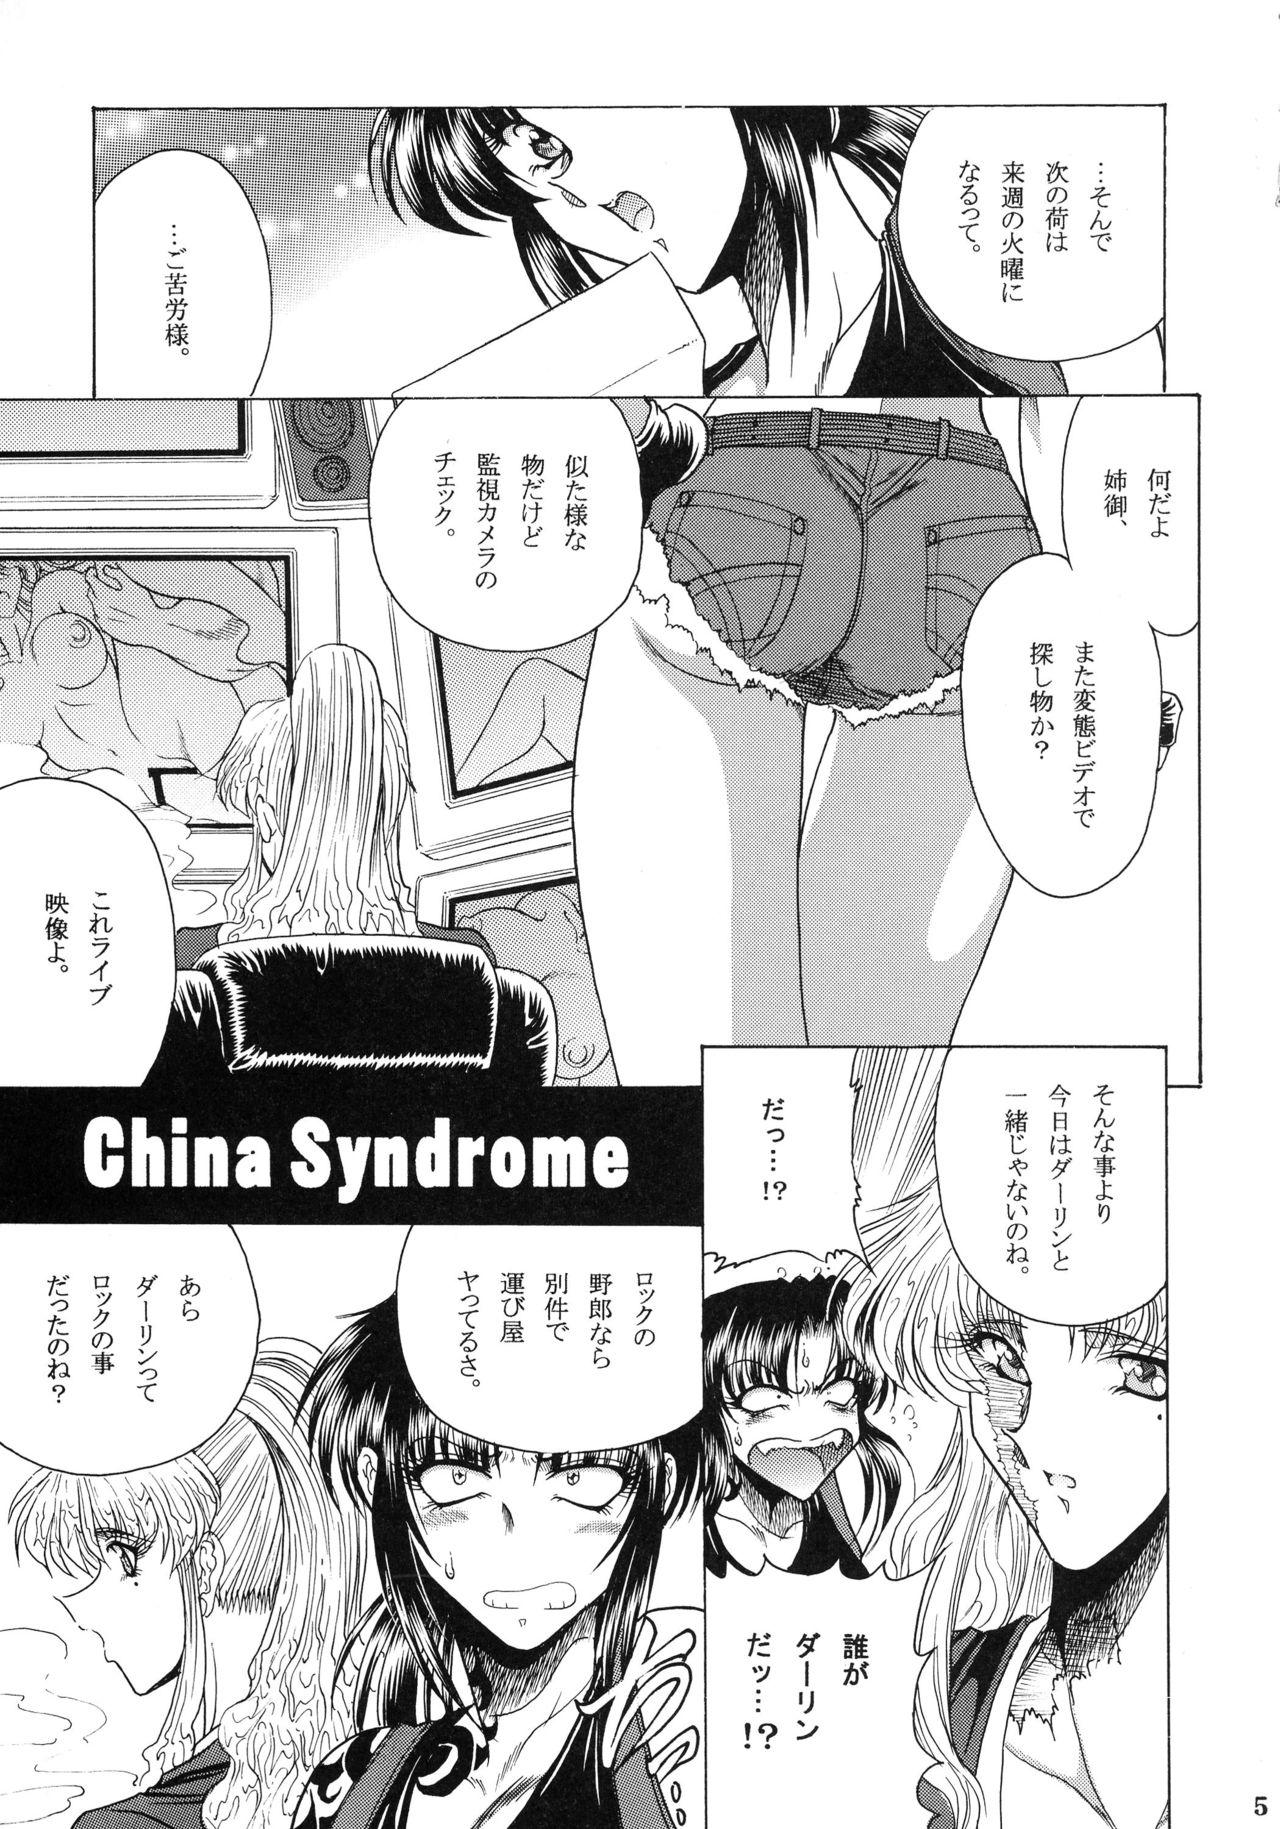 Sis ZONE 38 China Syndrome - Black lagoon Chicks - Page 4